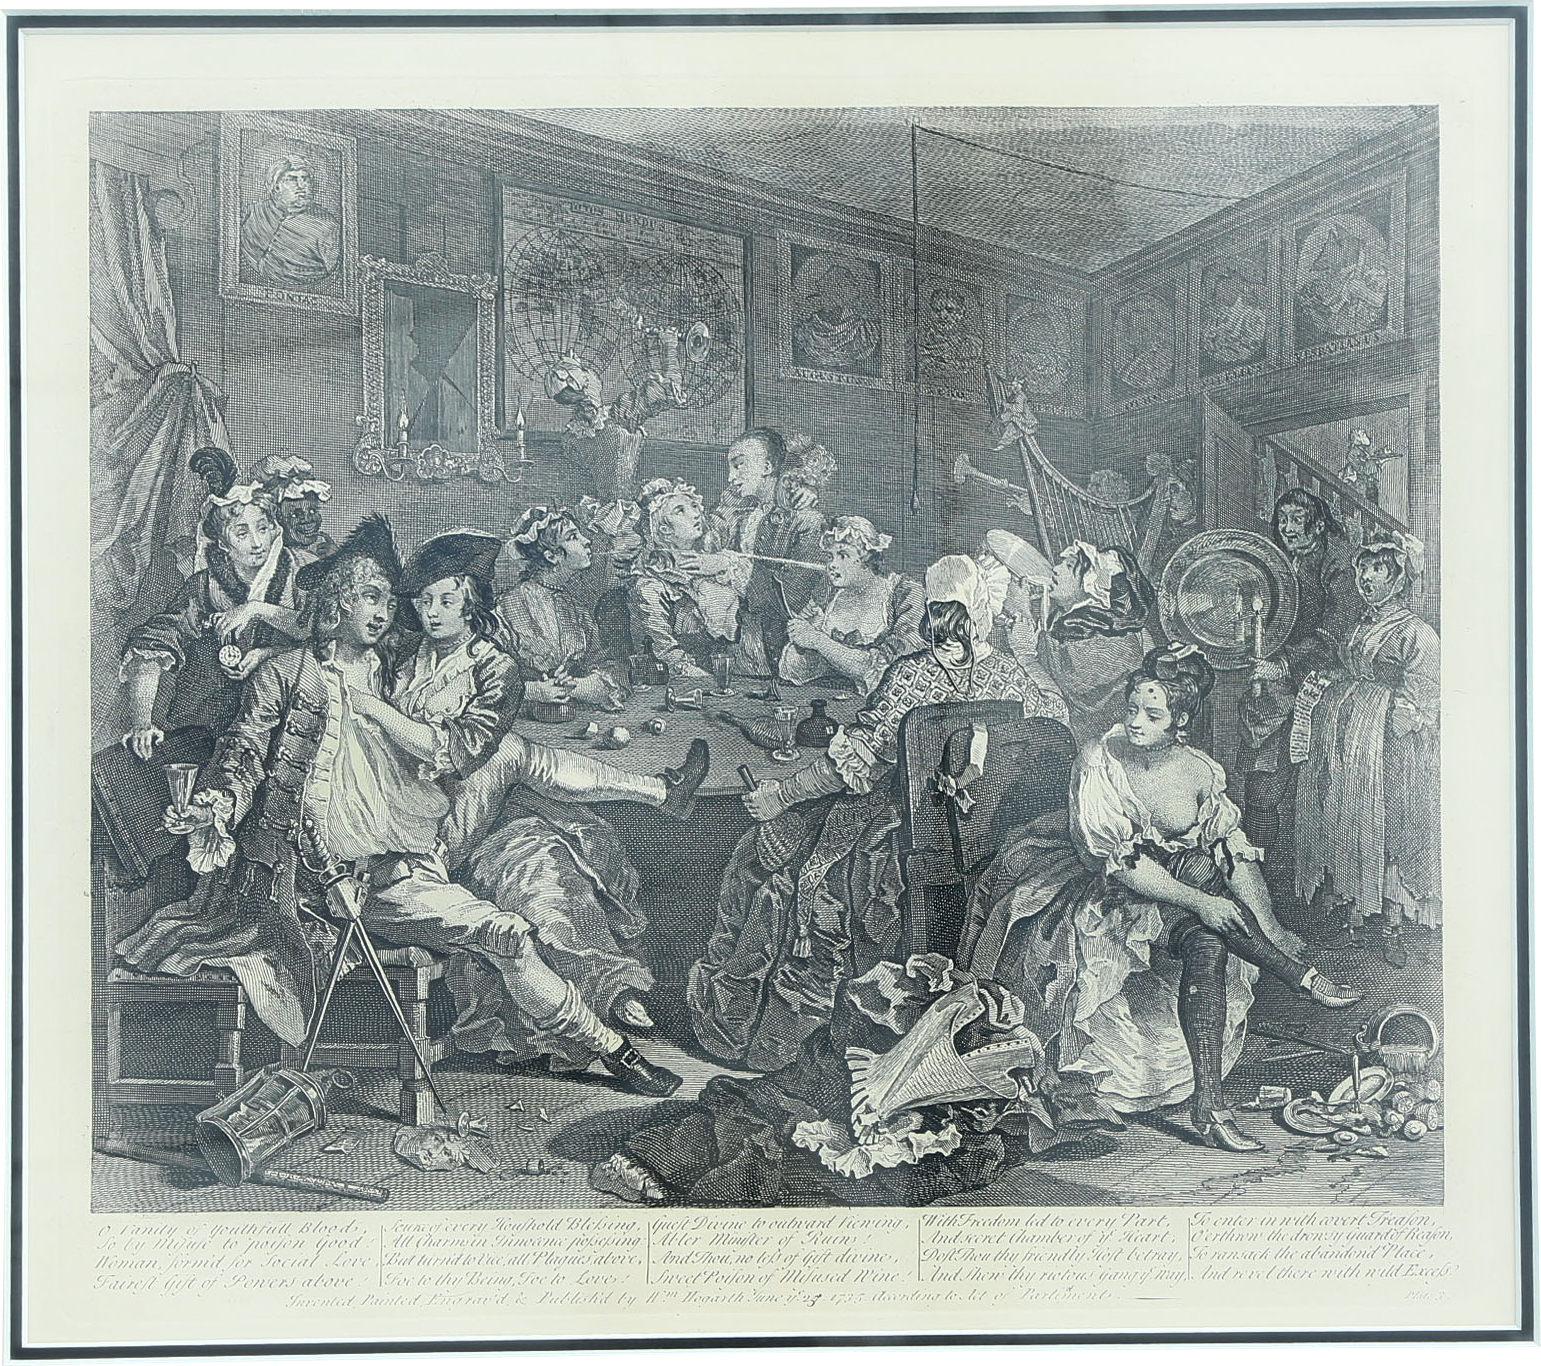 William Hogarth” A Rake’s Progress, Plate 3, The Orgy - Fagan Arms